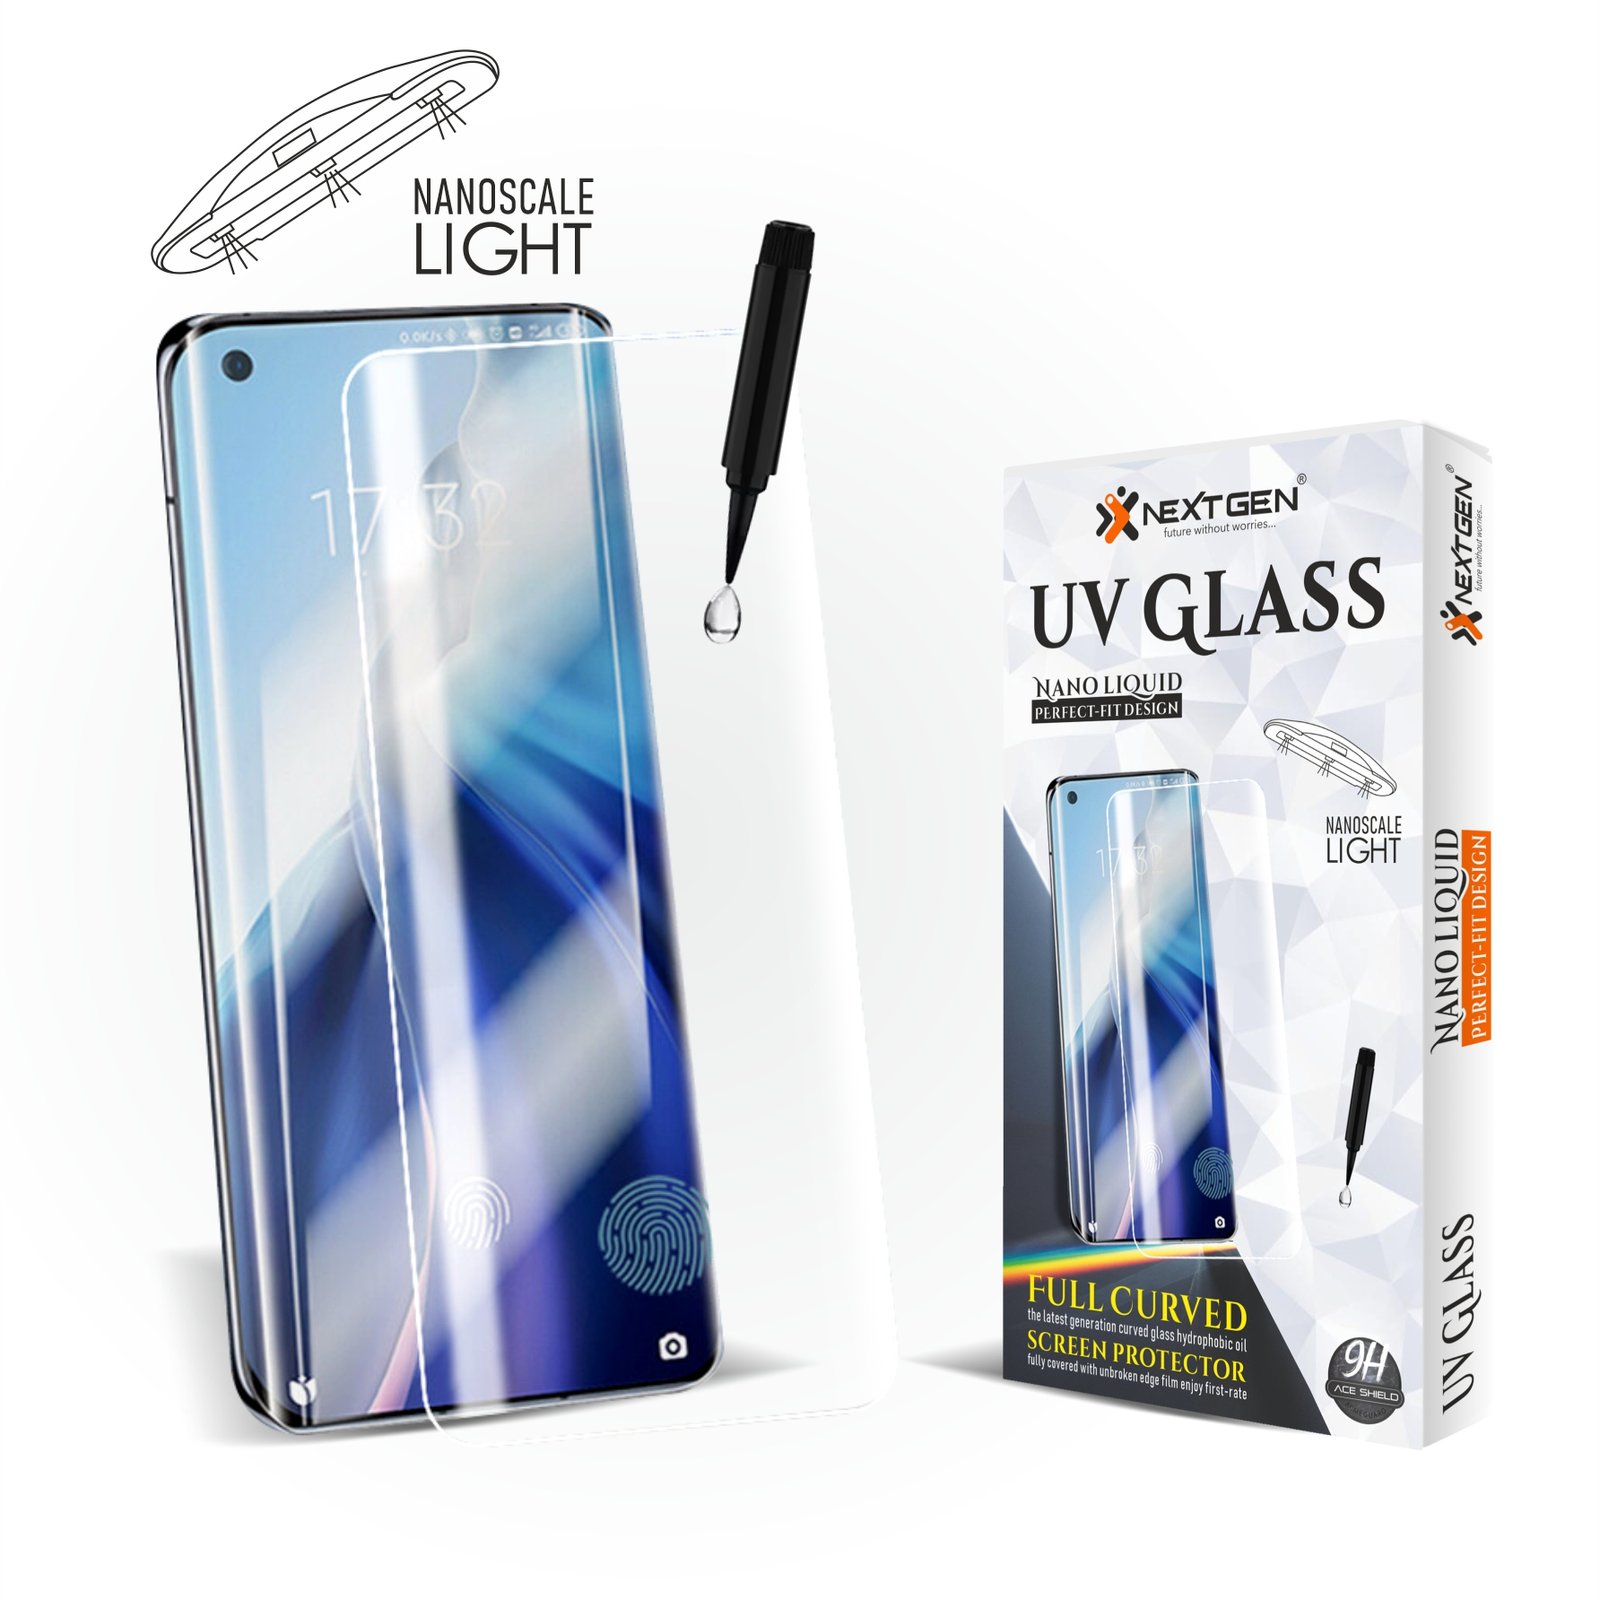 NGUV- T2pro Vivo Ultra UV Glass